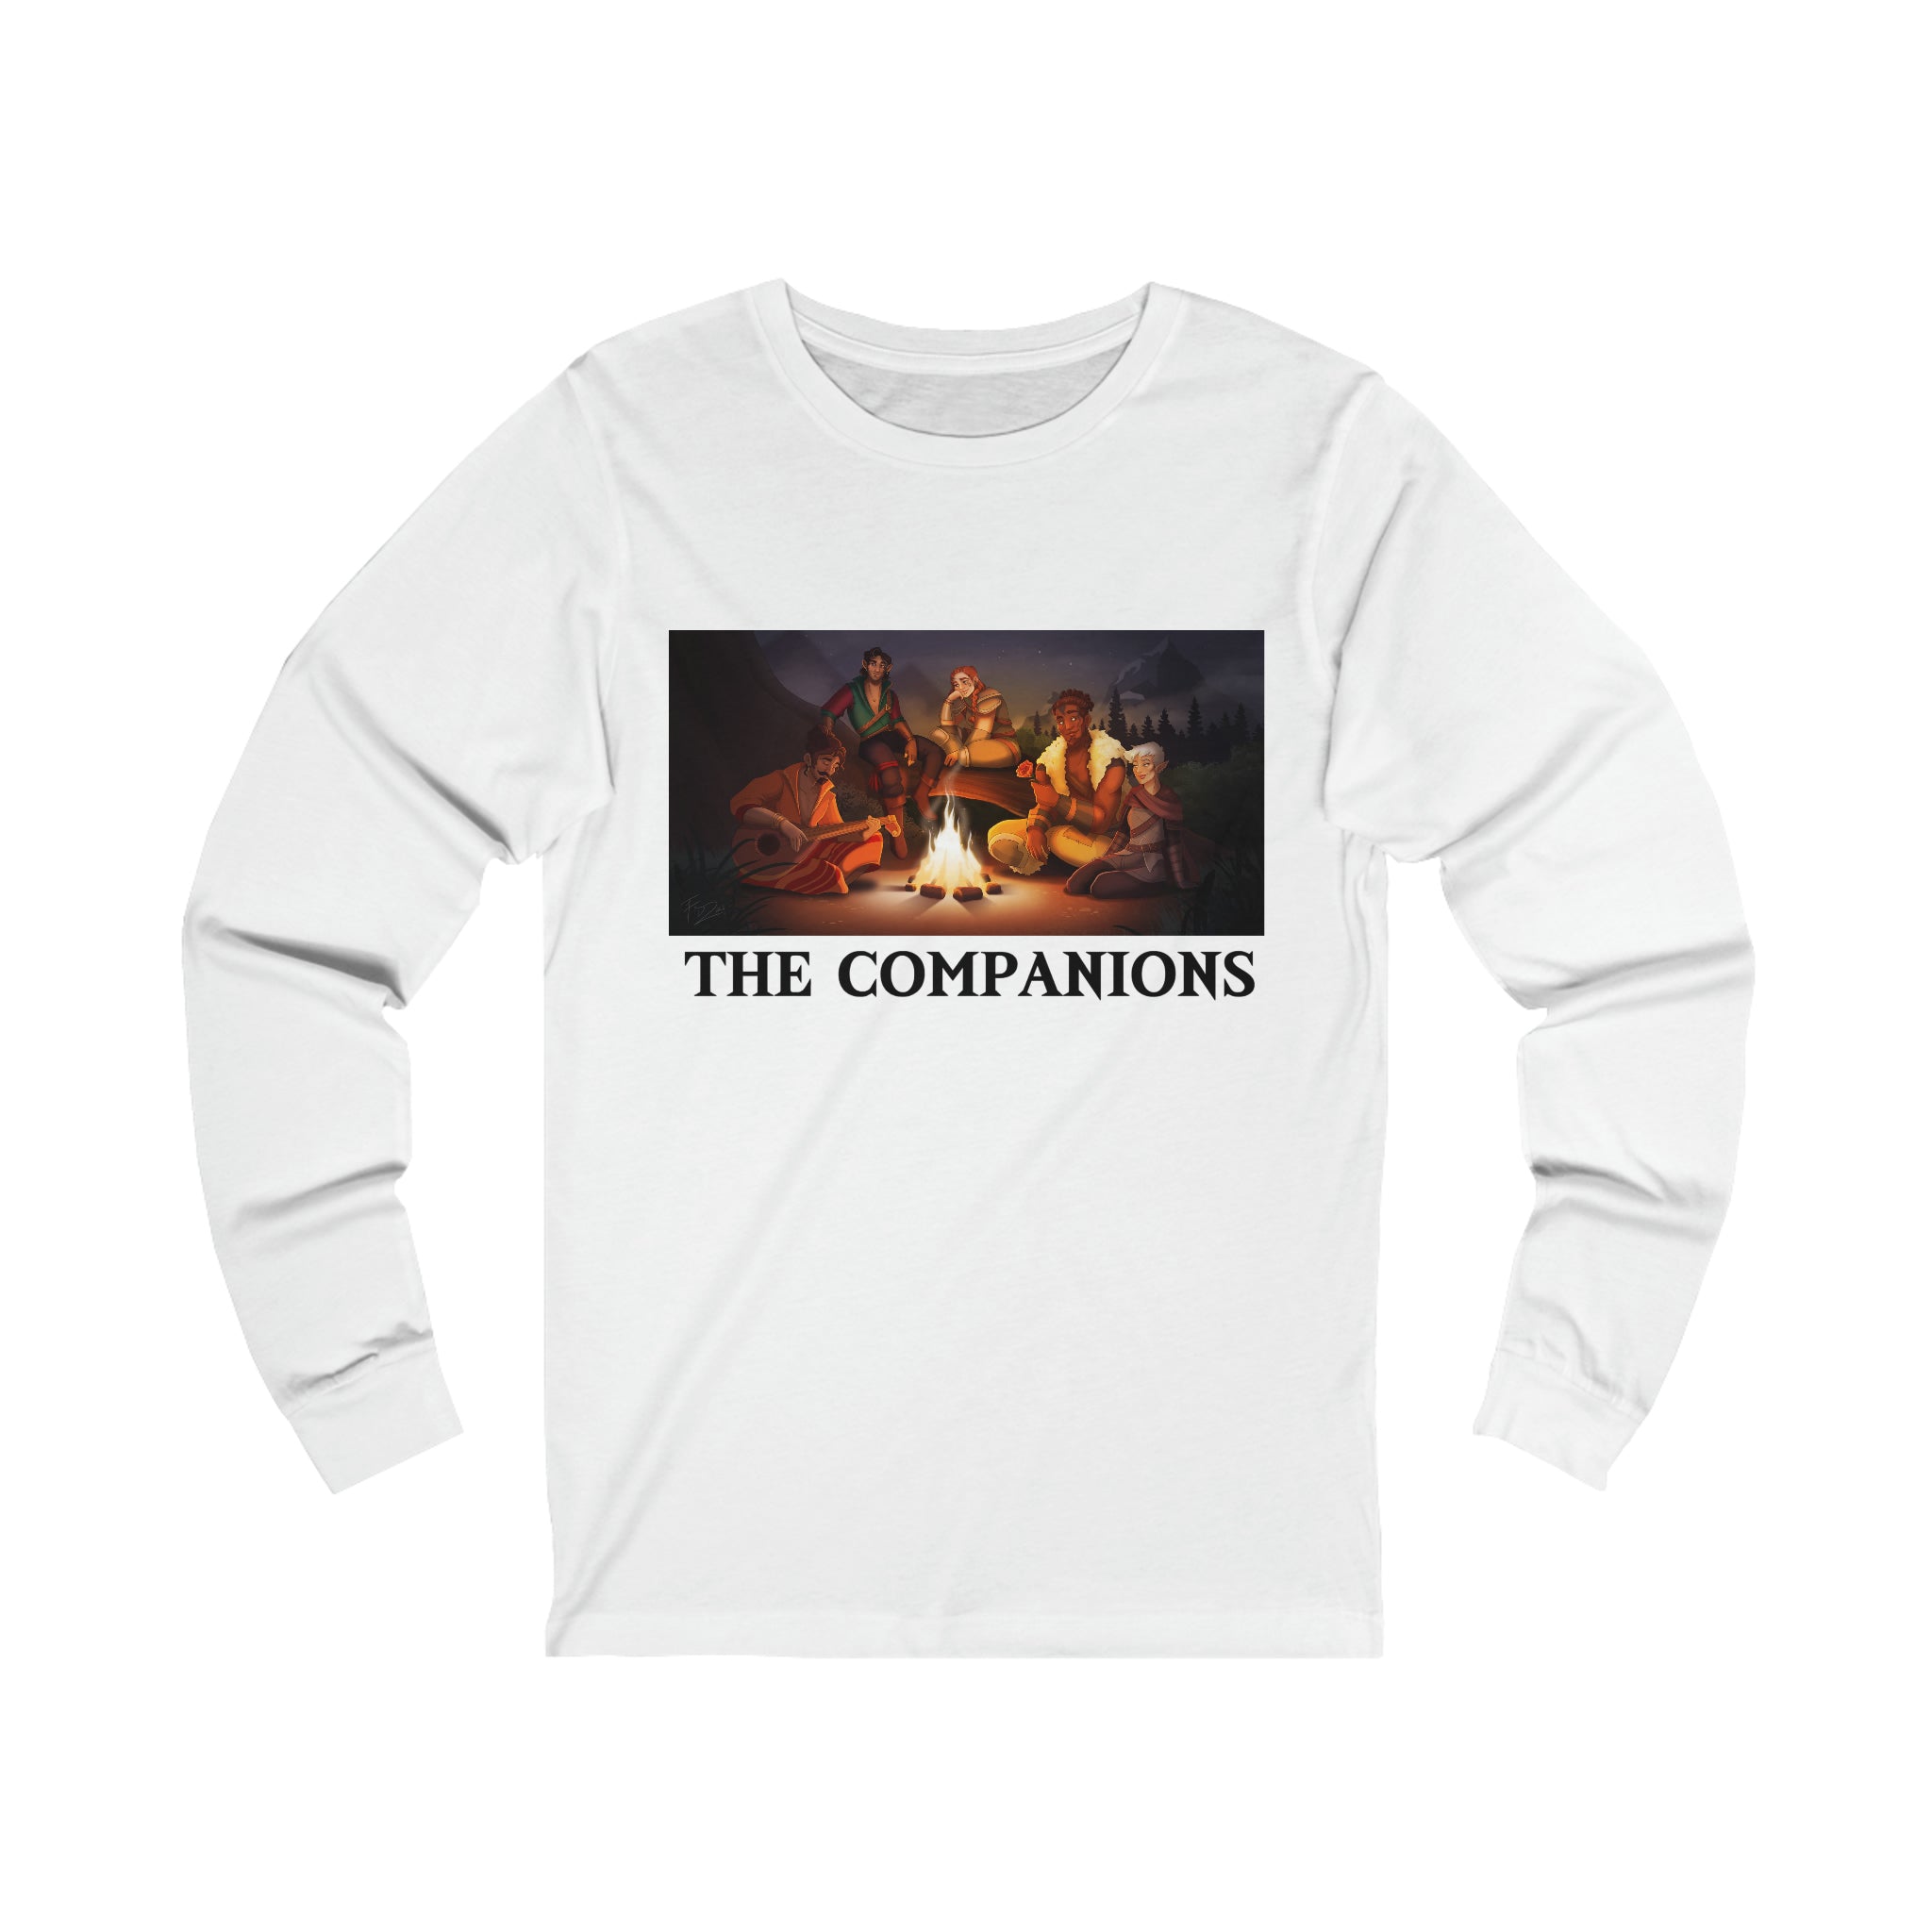 The Companions Campsite Long Sleeve T-Shirt